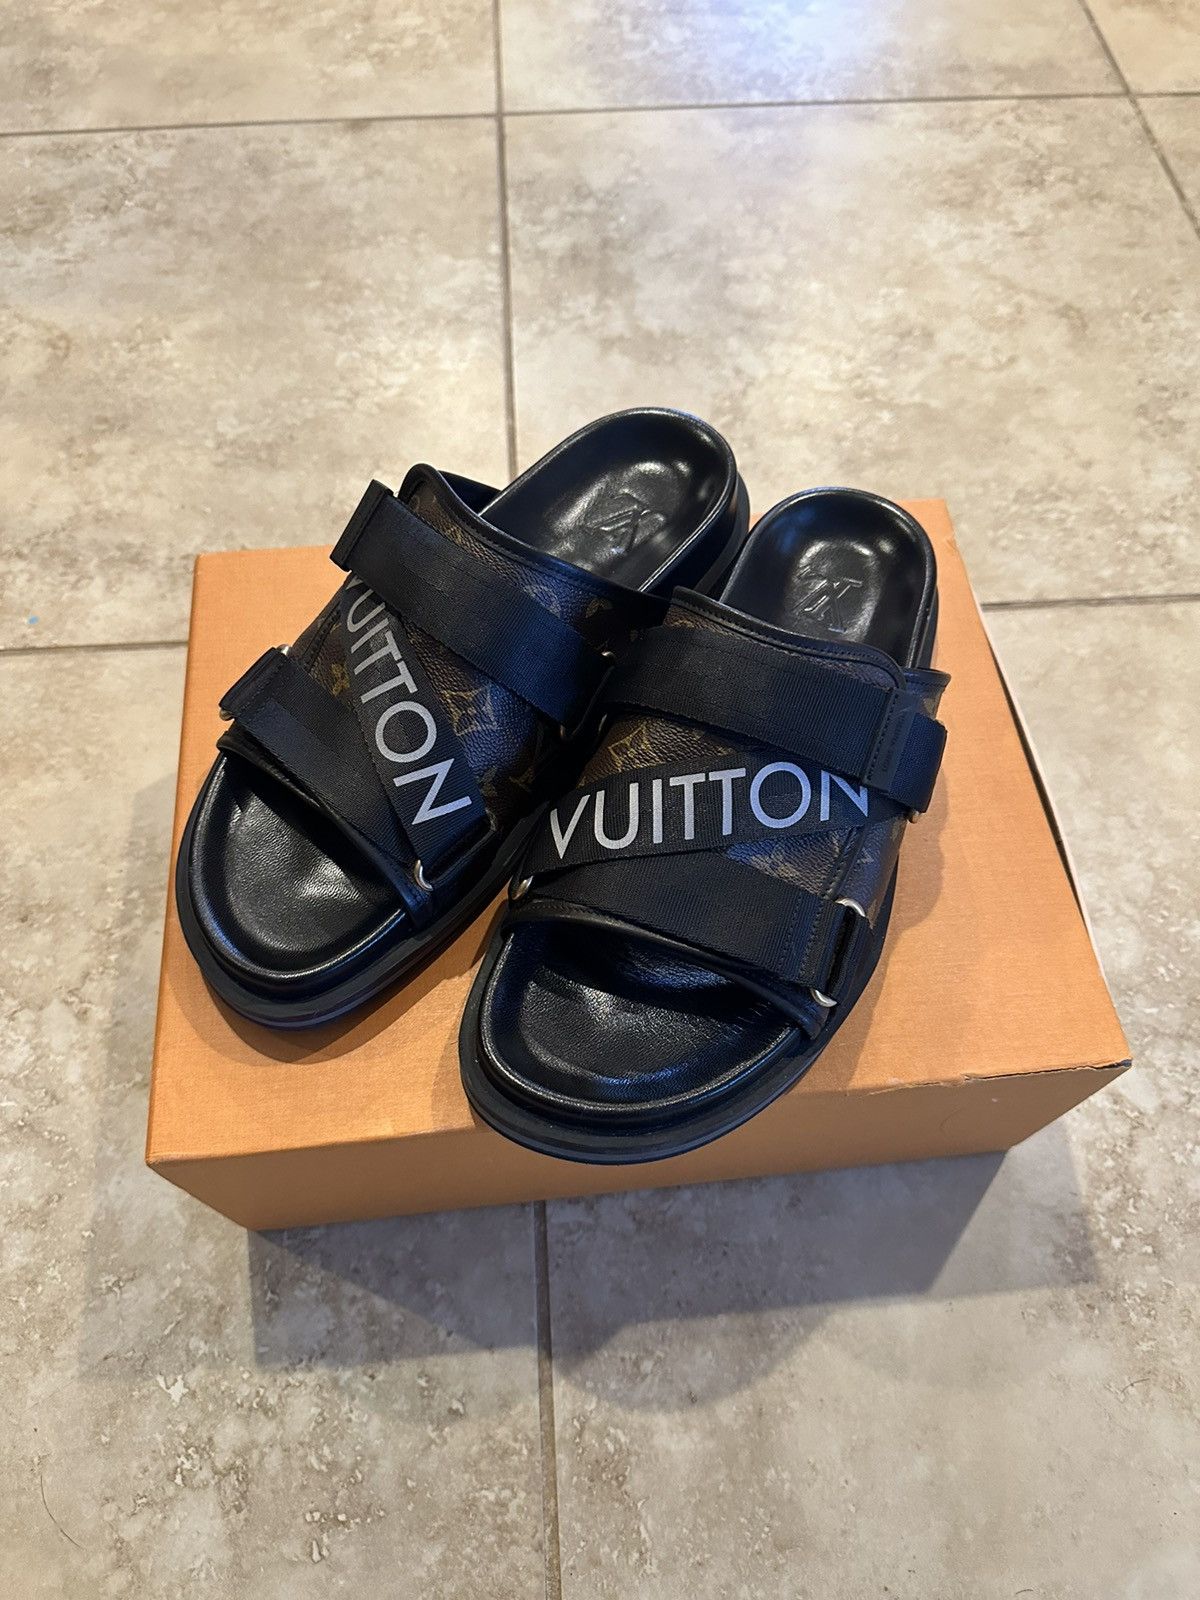 CITY BOY - YOUNGOHM with Louis Vuitton HONOLULU Mule Sandals ราคาอ้างอิงจาก  Louis Vuitton TH Website . Cr. #YOUNGOHM #LouisVuitton . อย่าลืม Like CIT